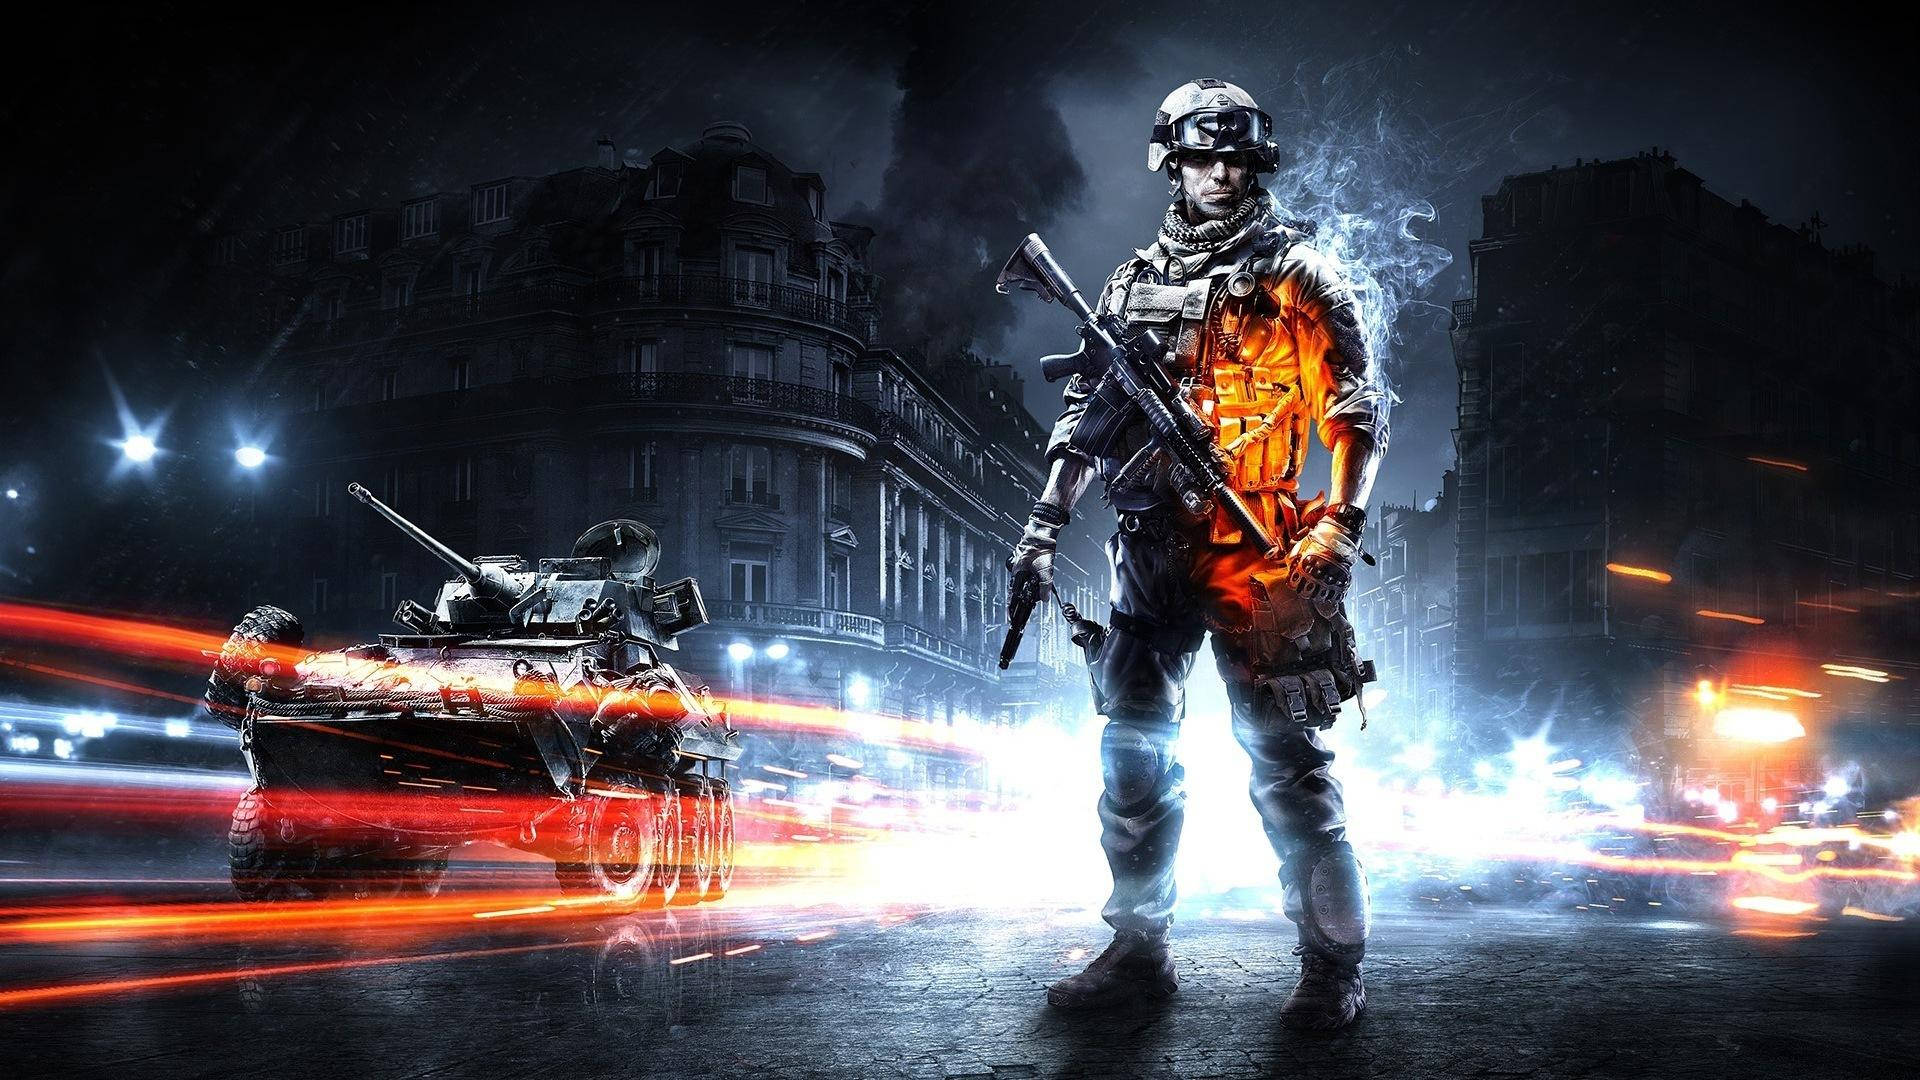 Battlefield 3 Poster In Action Wallpaper